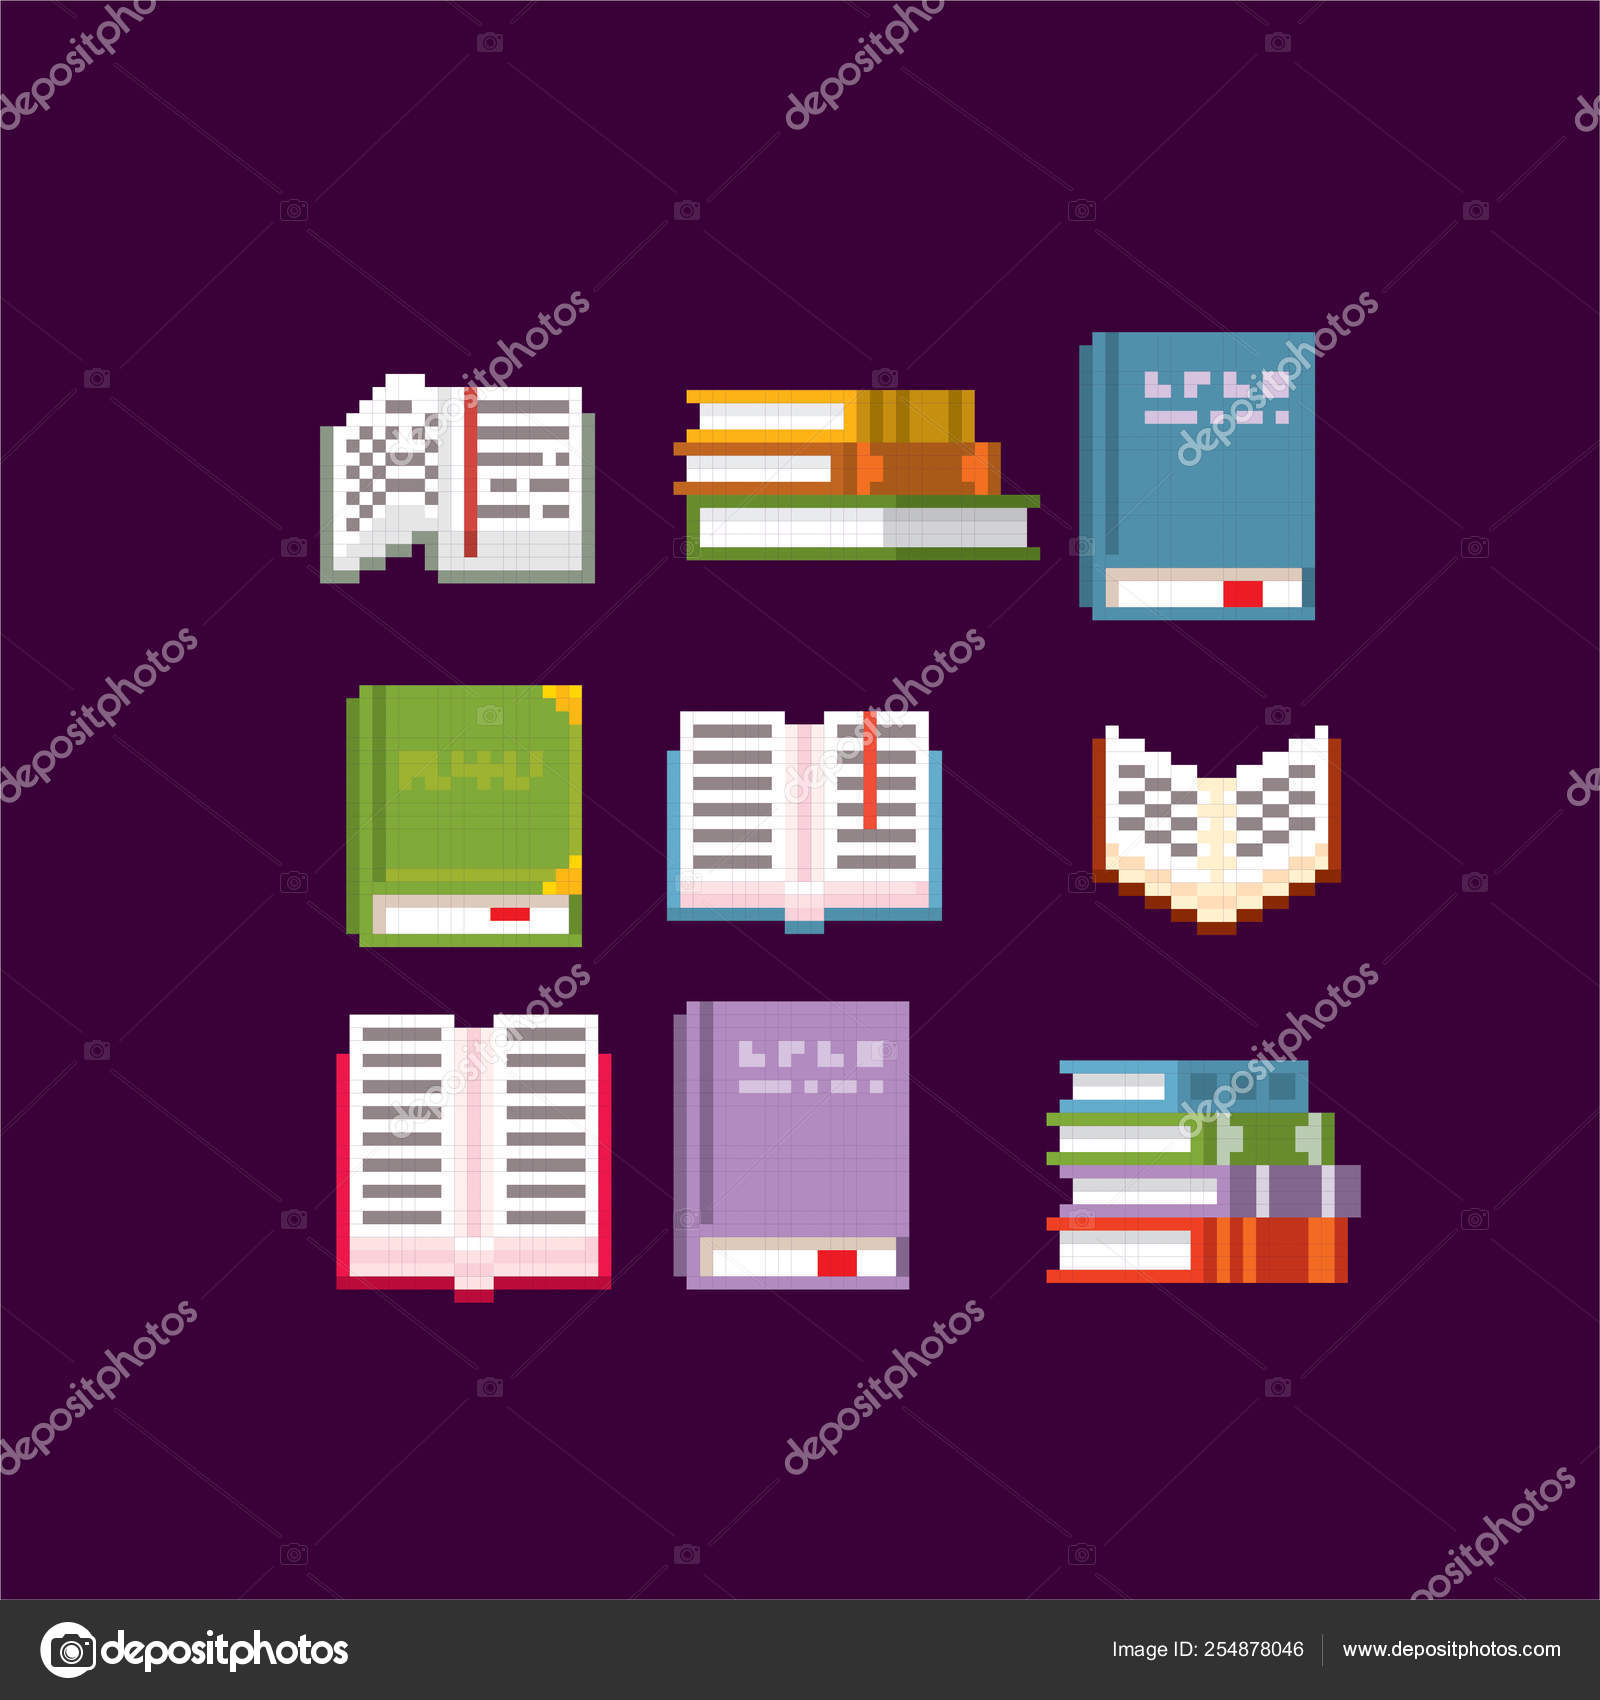 Books Set Pixel Art Old School Computer Graphic Element Design Stickers Logo Mobile App Menu 8 Bit Video Game Game Assets 8 Bit Sprite 16 Bit Vector Image By C Dergriza Vector Stock